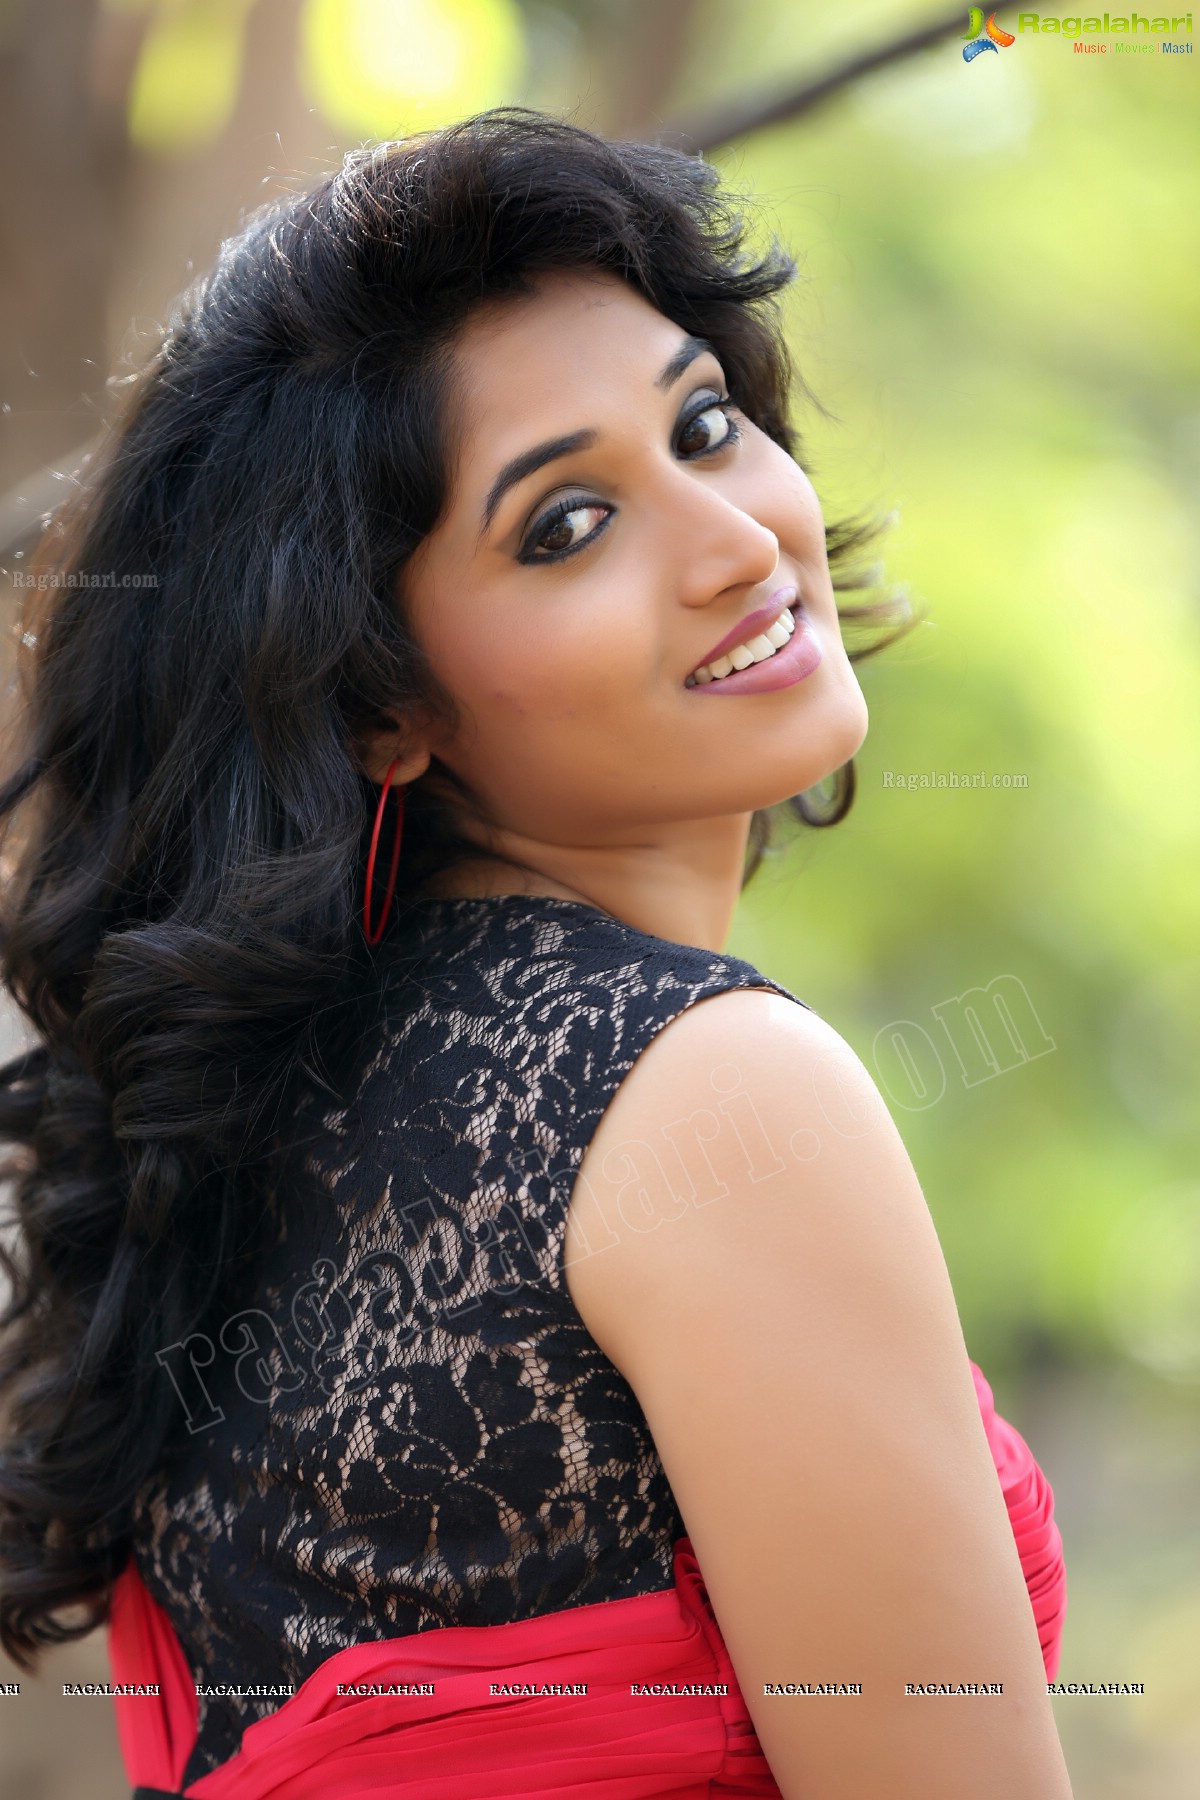 Ragalahari Telugu Tv Actress - 1200x1800 Wallpaper 